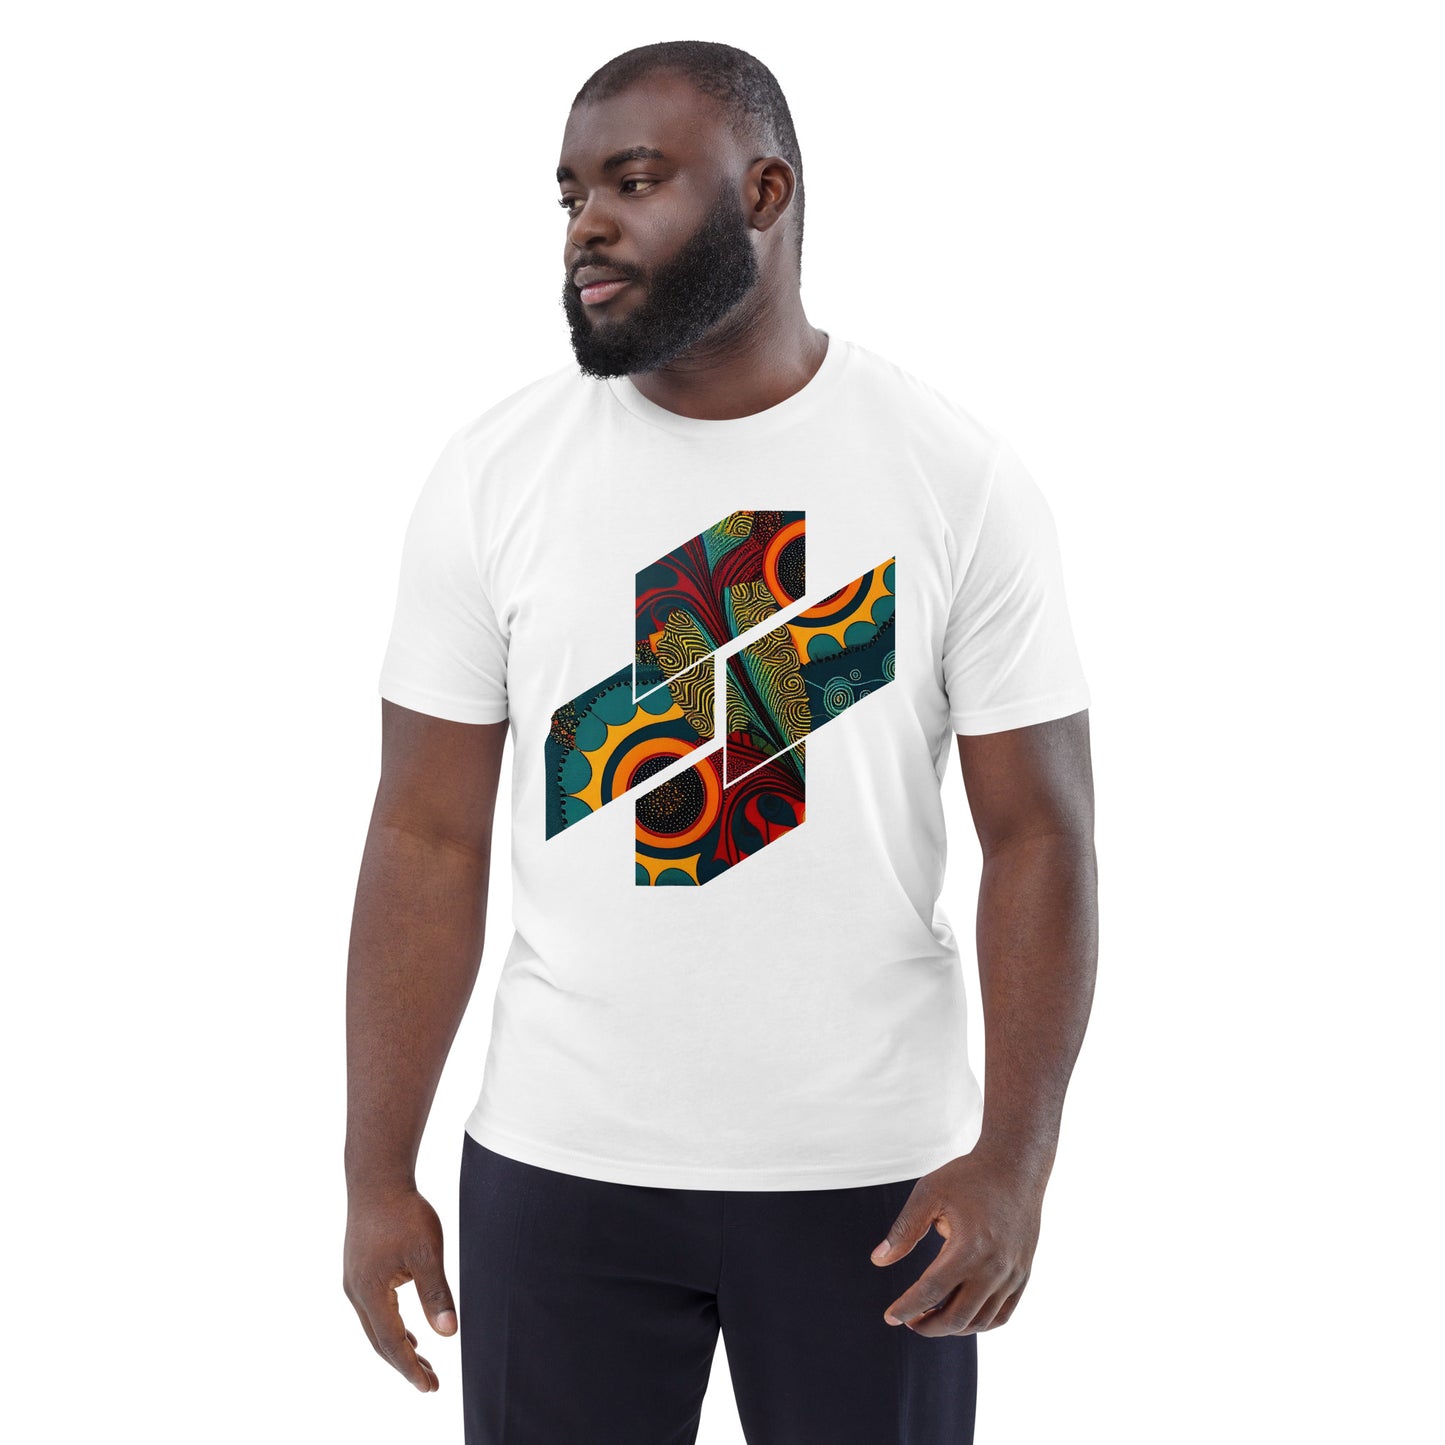 Stunning African Ankara-Inspired T-Shirt Design, Unisex Organic Cotton Tee